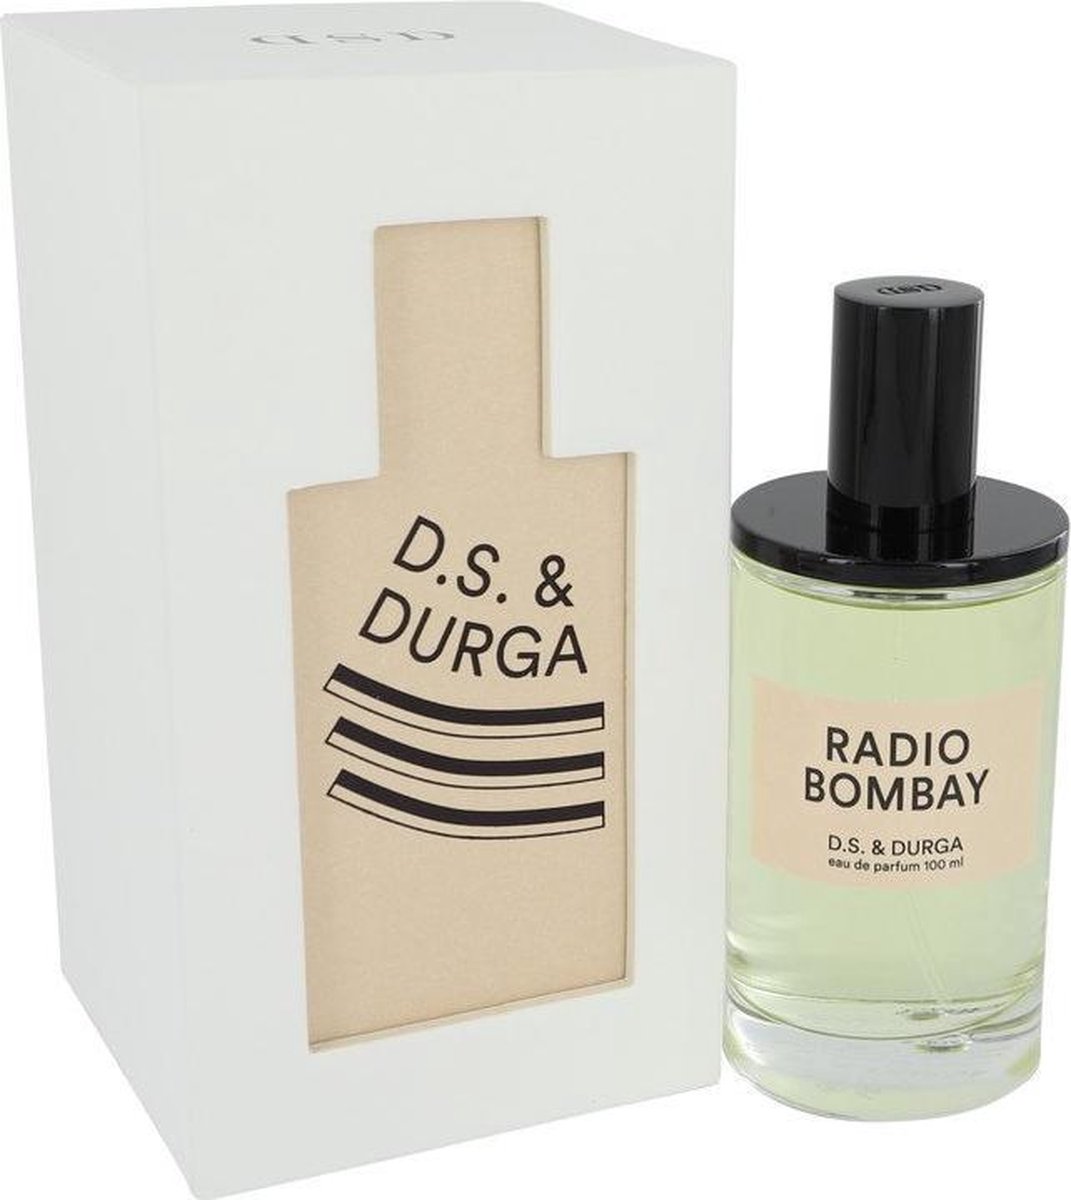 D.S. & Durga Radio Bombay eau de parfum spray 100 ml